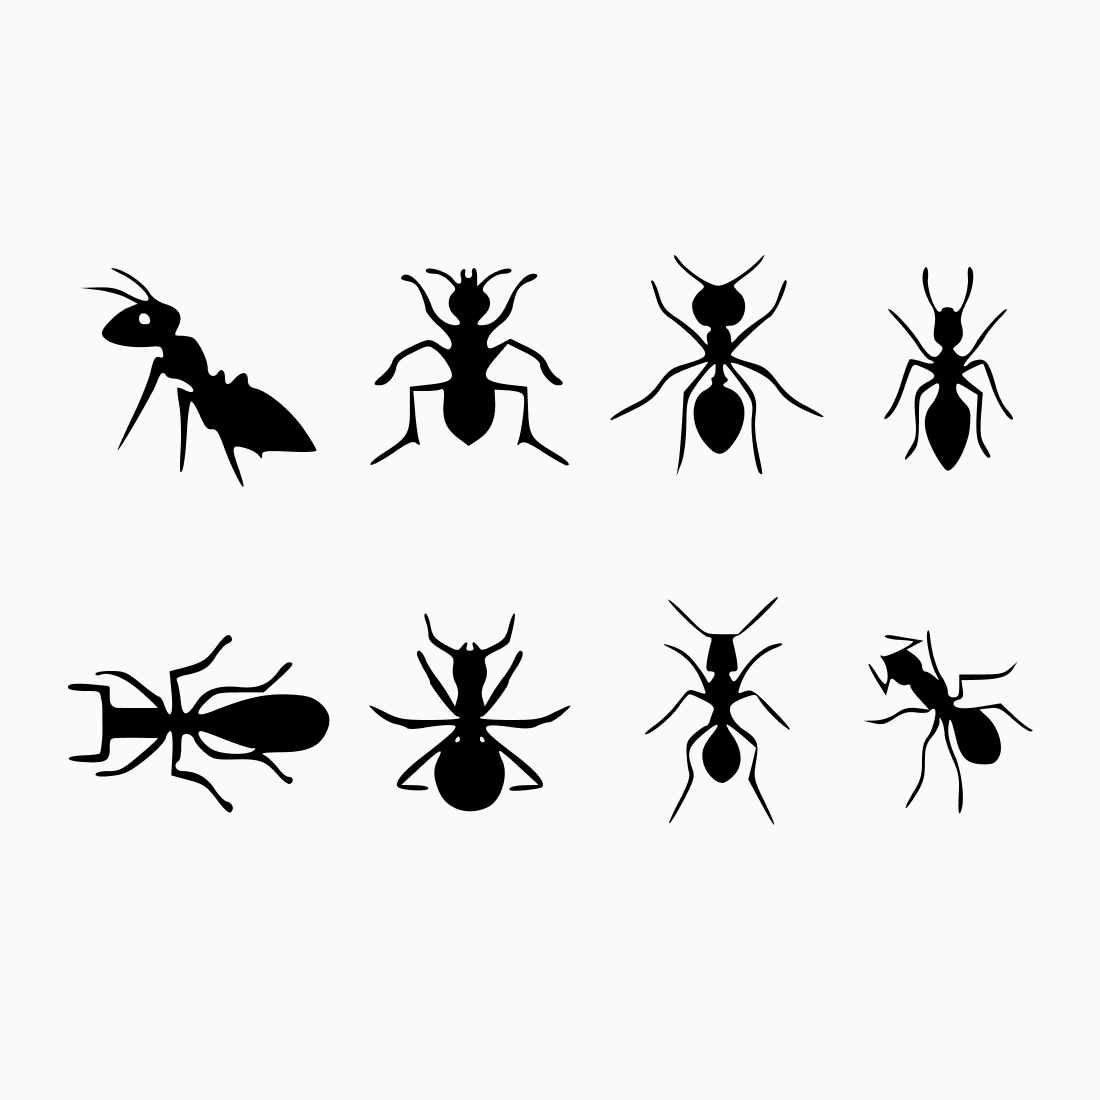 Ants SVG bundle.